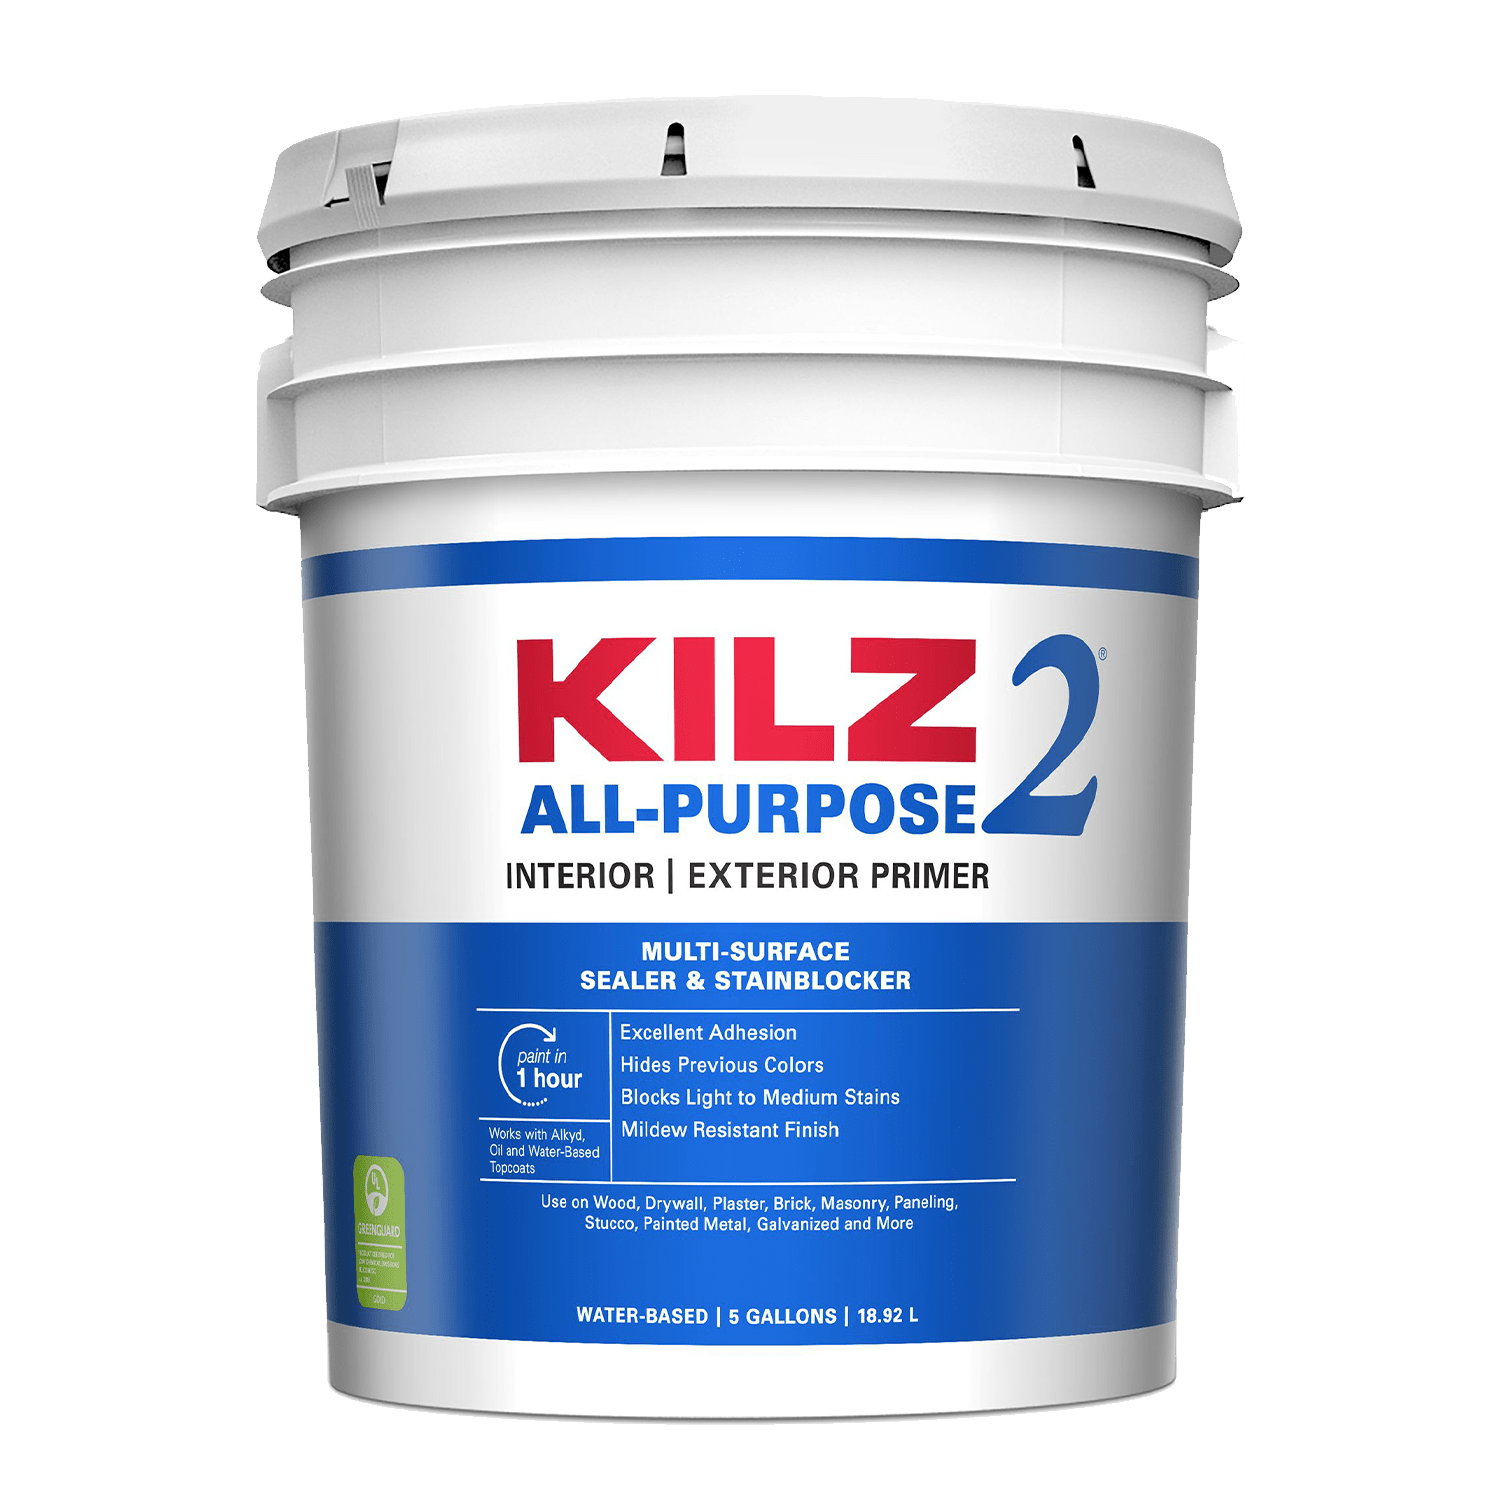 KILZ 2® ALL-PURPOSE Interior and Exterior Primer